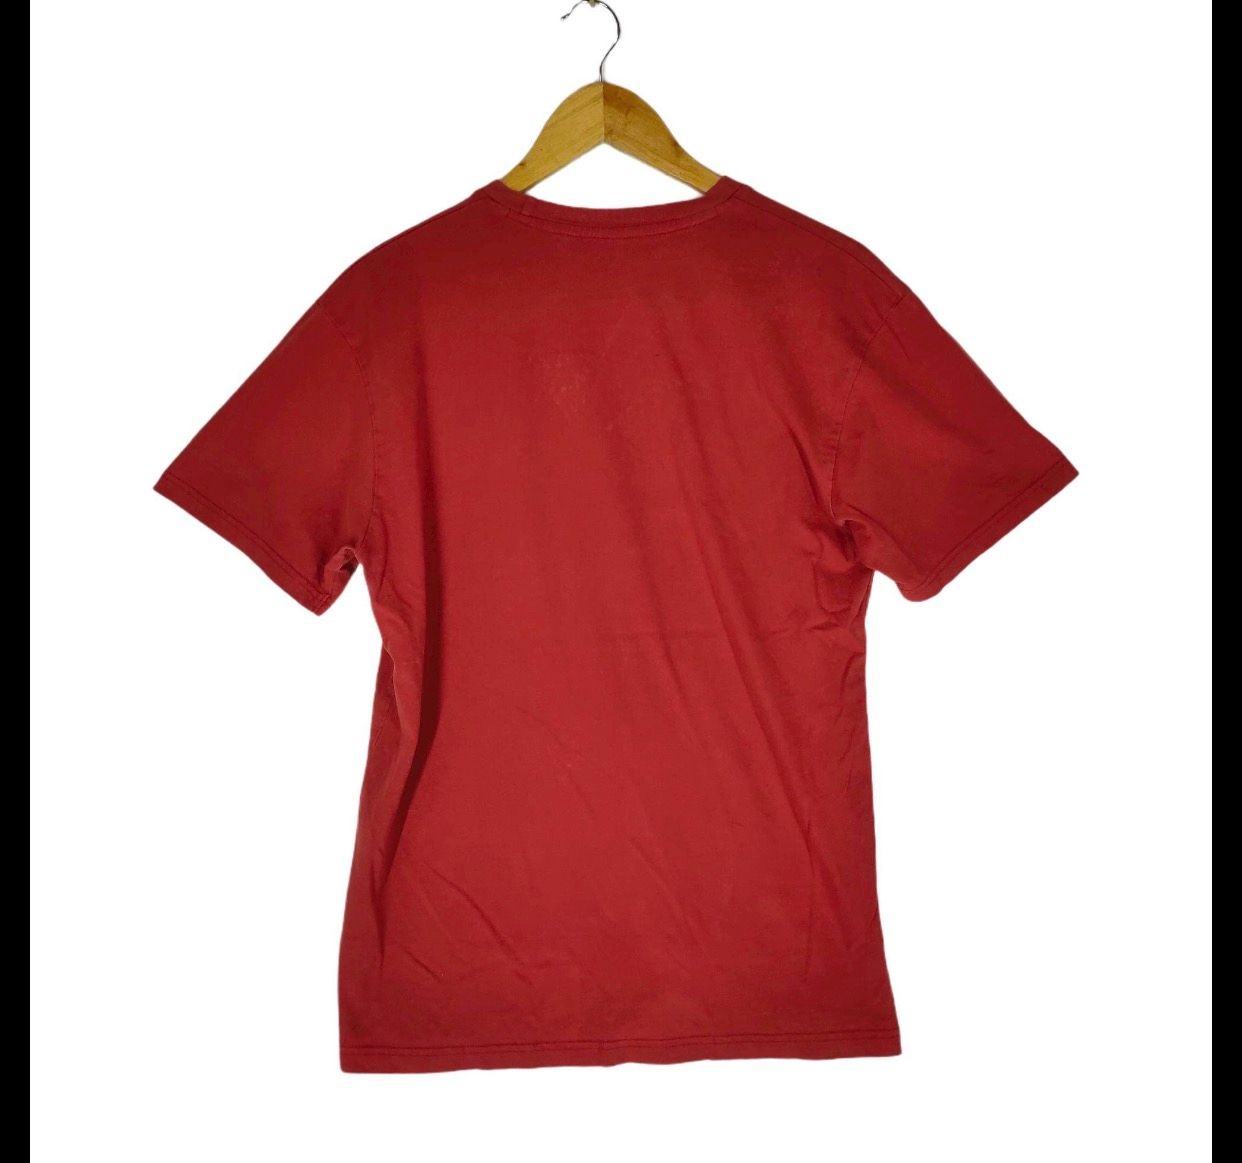 Vintage ARC’TERYX EMBROIDERY LOGO Round Neck Shirt - 2